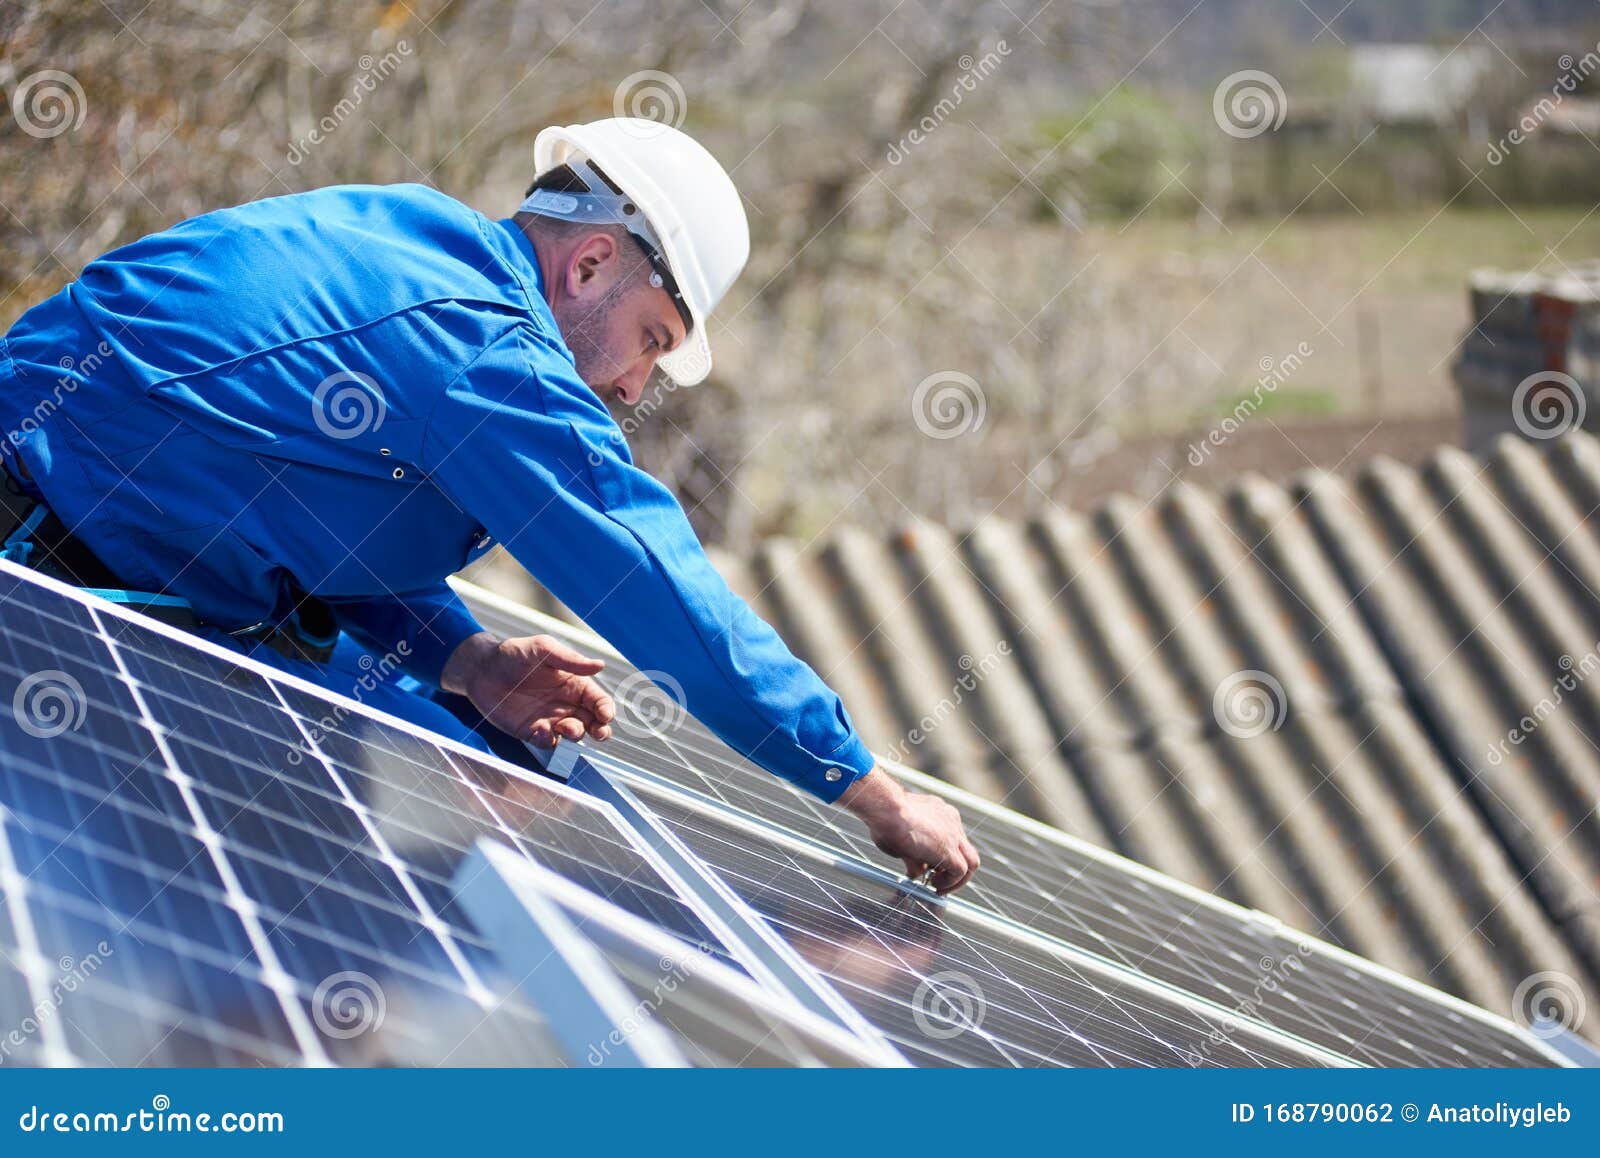 Pv solar panel electrician jobs